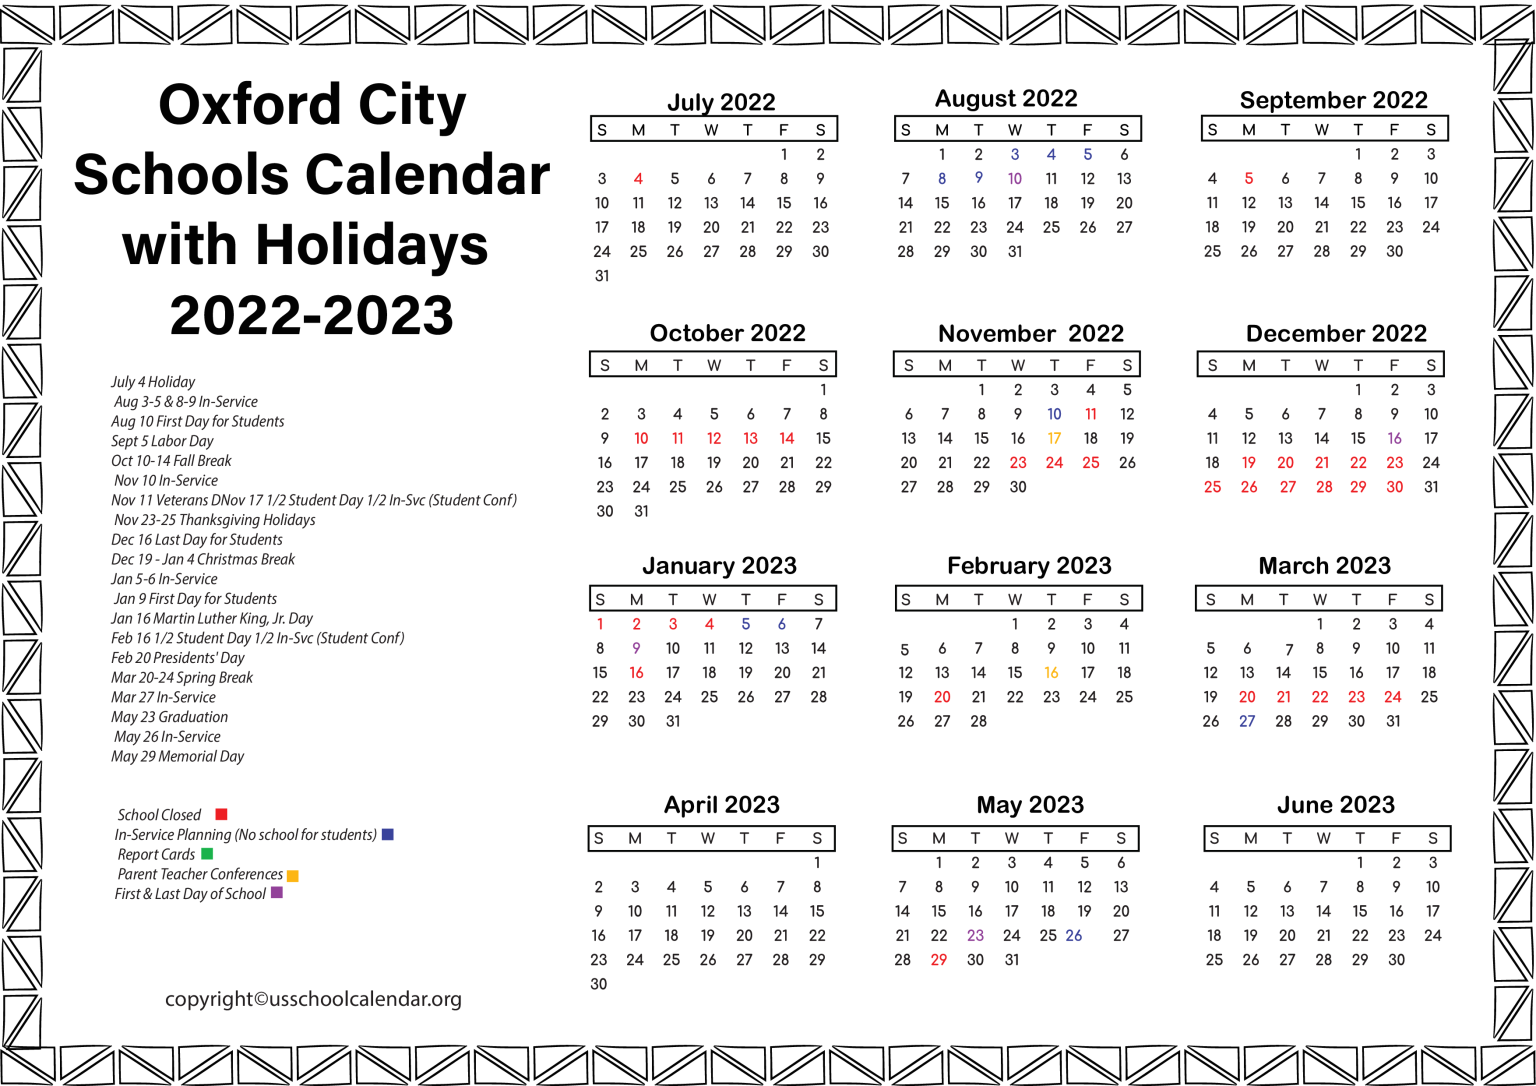 Oxford City Schools Calendar with Holidays 2023